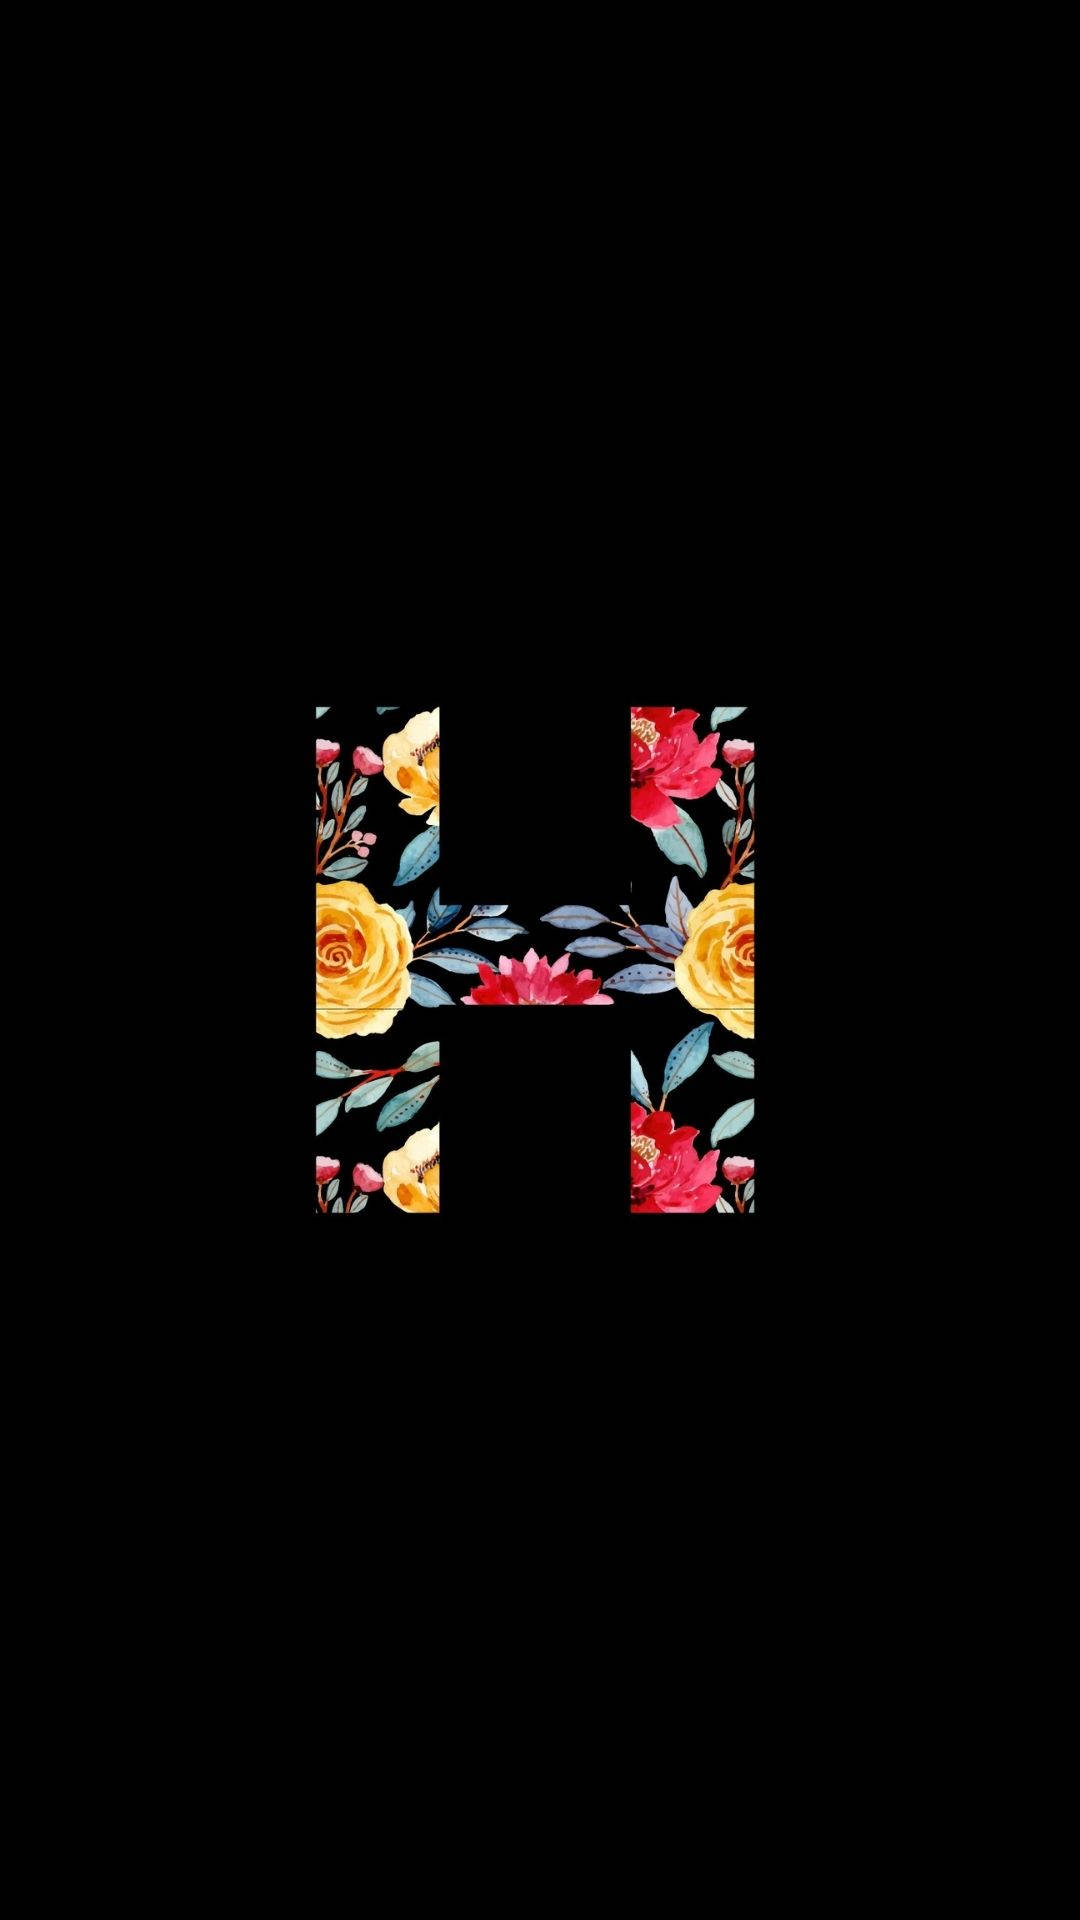 Floral Design In Letter H Alphabet Picture